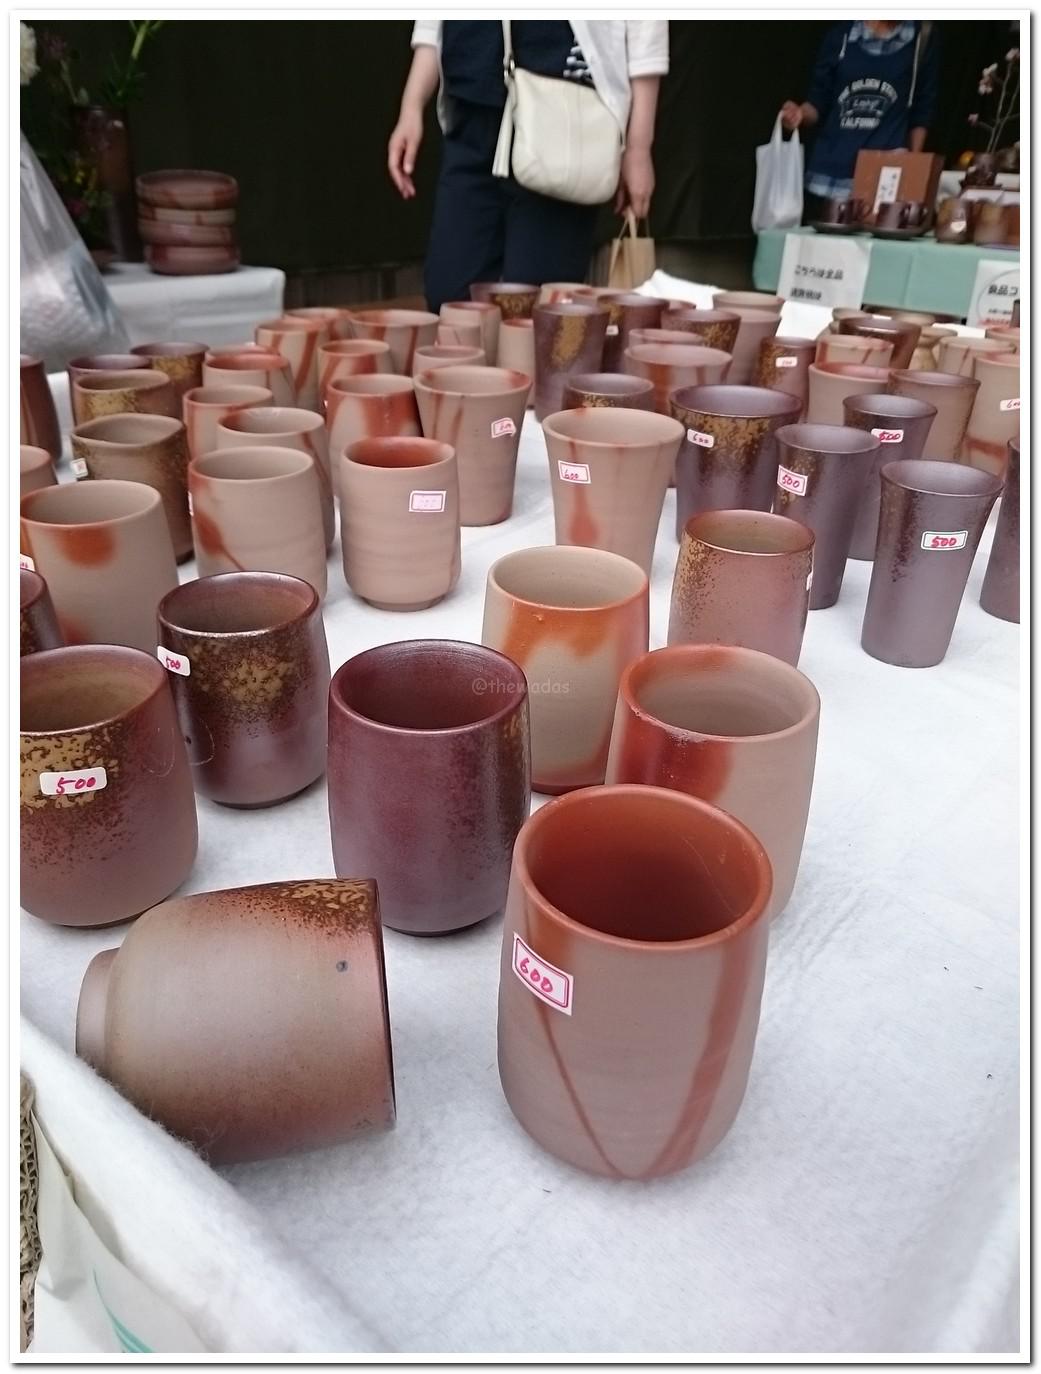 Bizenyaki Matsuri: Bizen Pottery Festival (Bizen City)